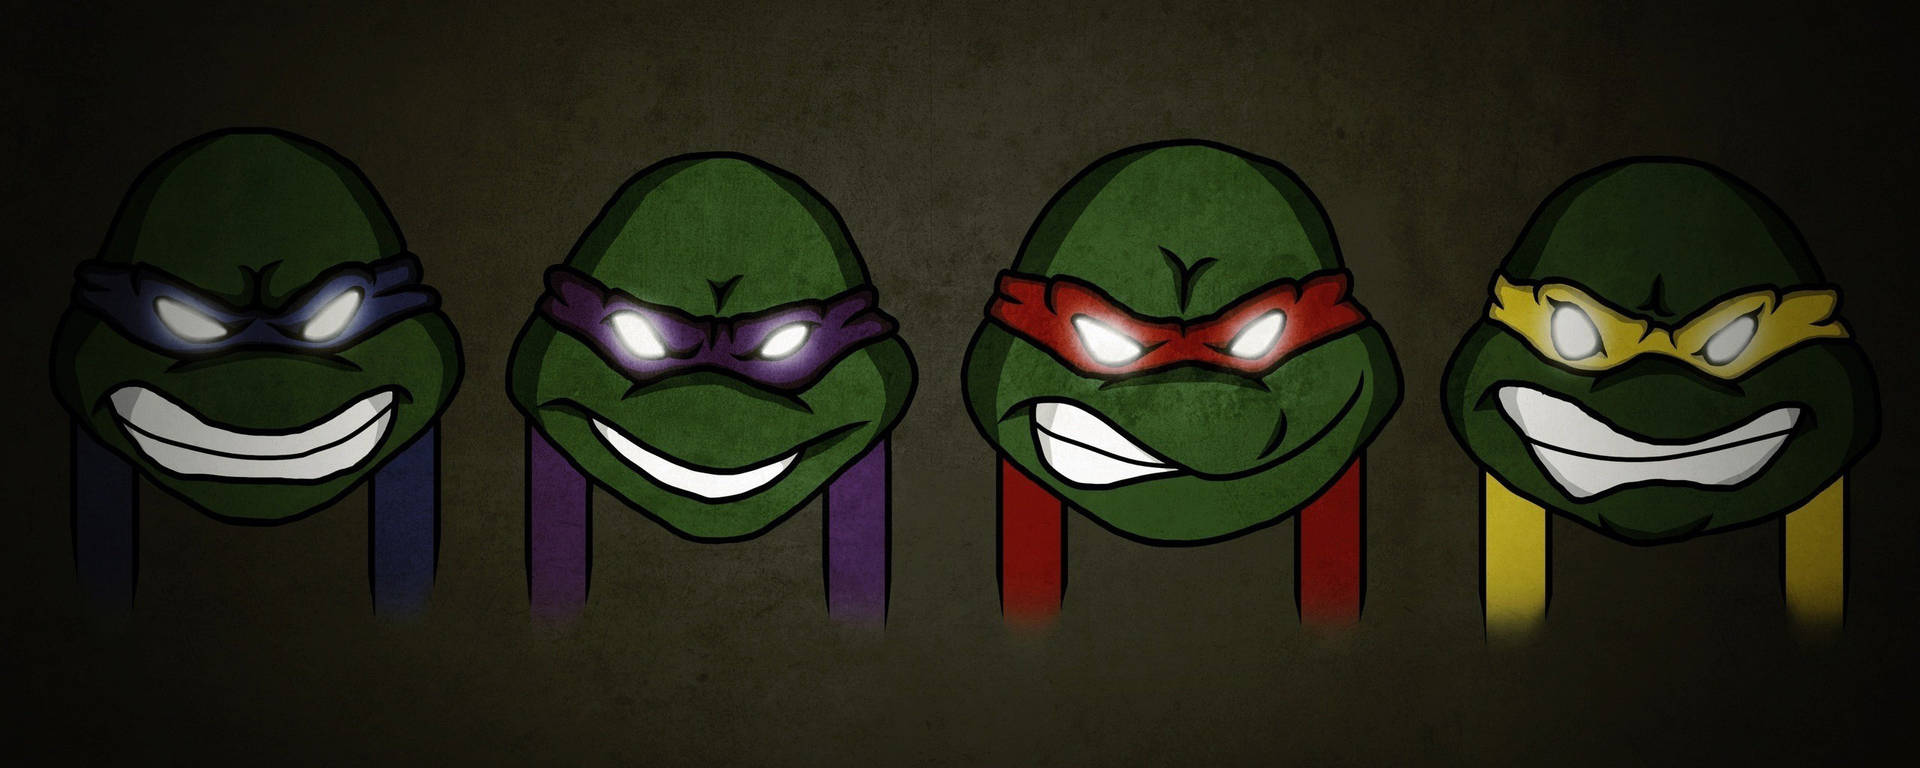 Ninja Turtle Smiling Faces Wallpaper